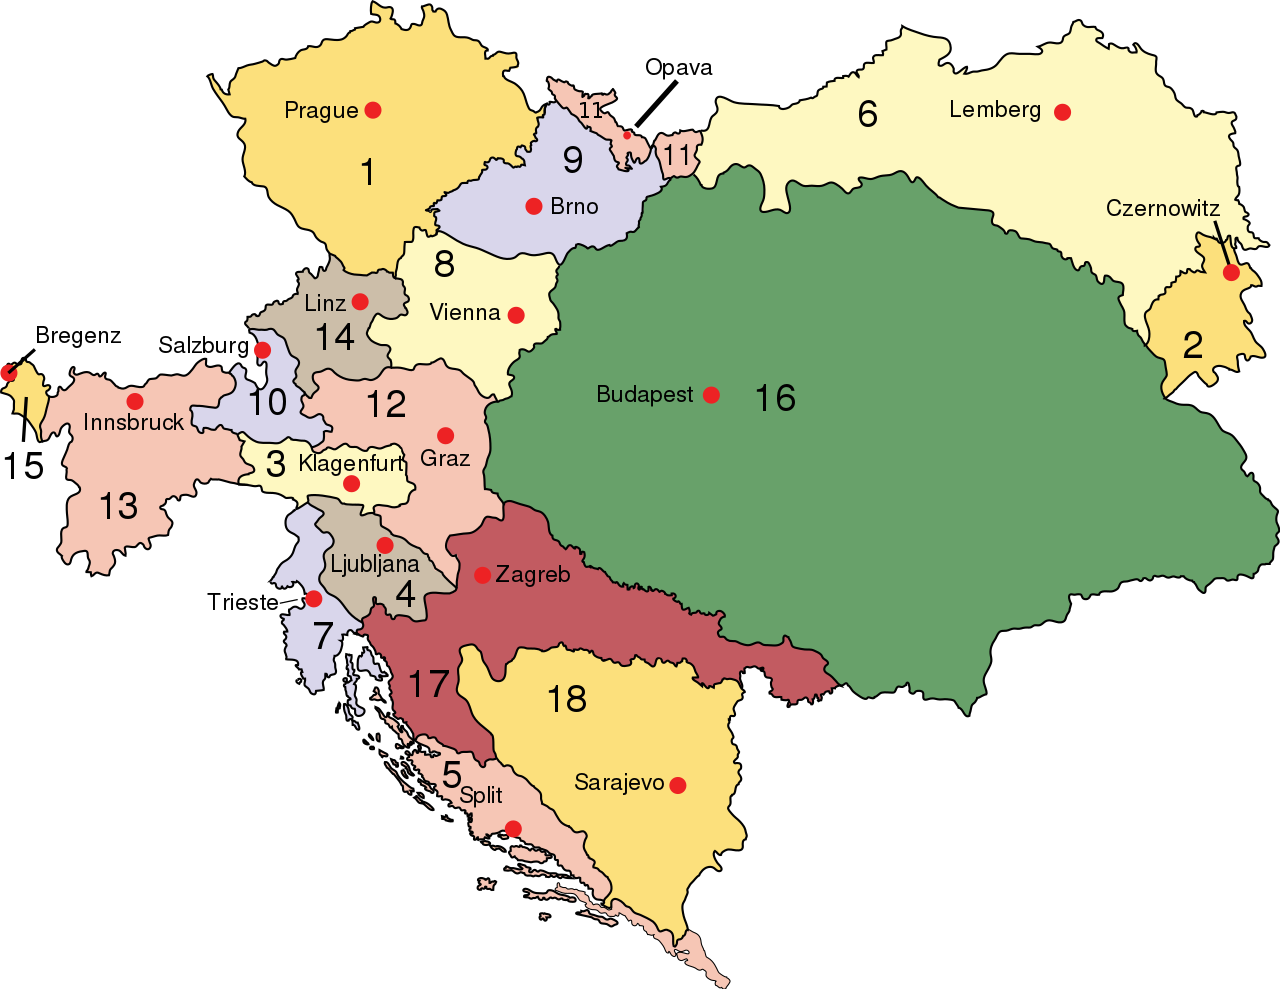 The Kingdom of Croatia-Slavonia (no. 17) was an autonomous kingdom within Austria-Hungary created in 1868 following the Croatian-Hungarian Settlement.